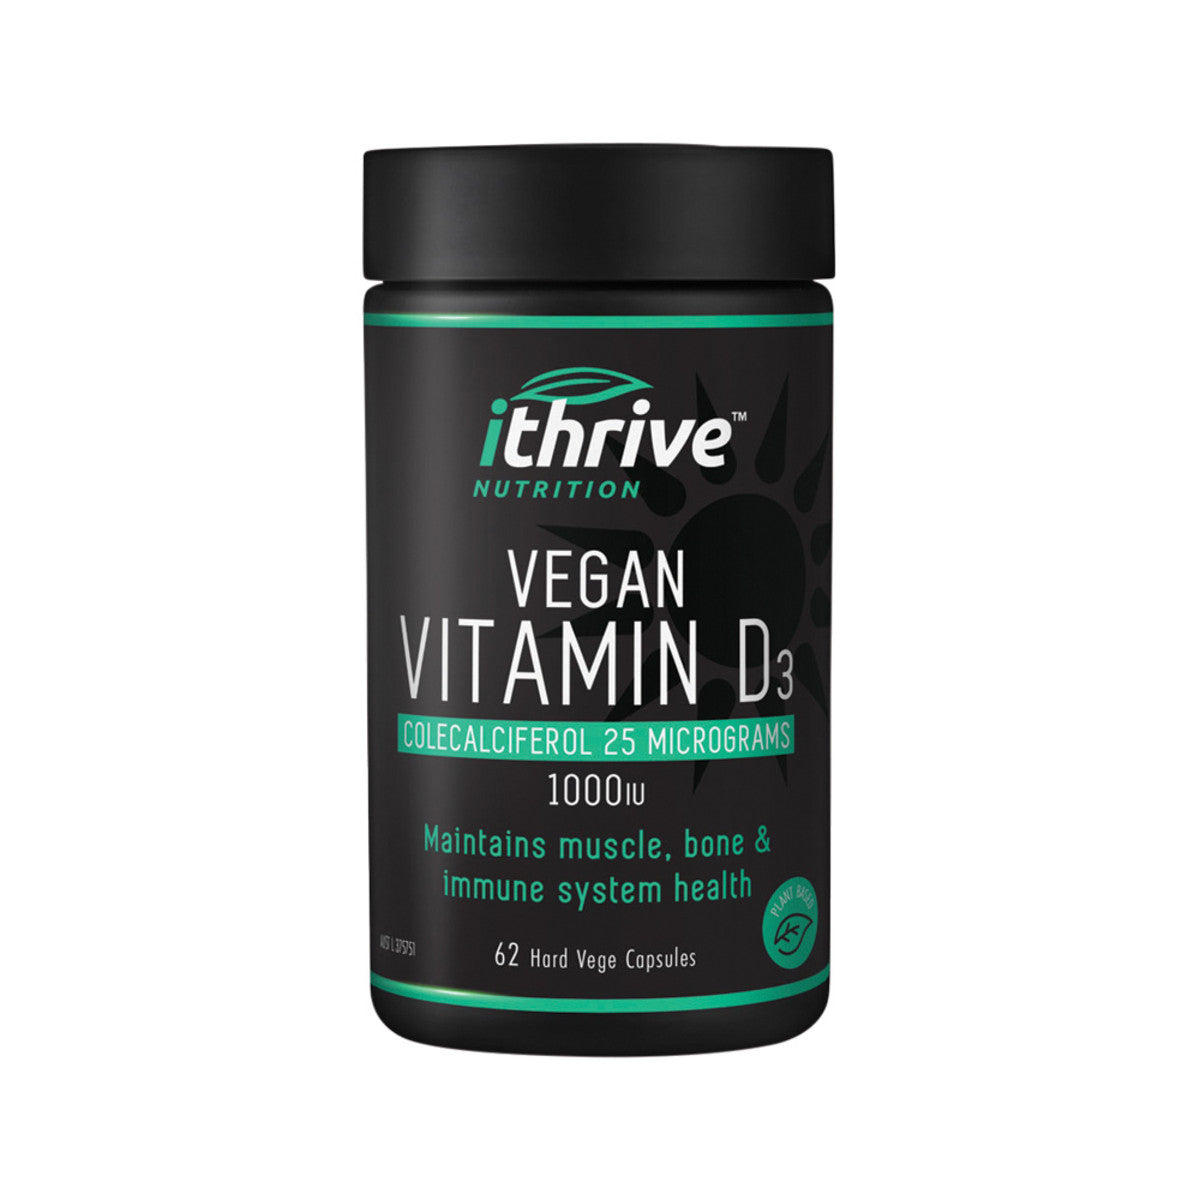 iThrive - Vegan Vitamin D3 1000IU